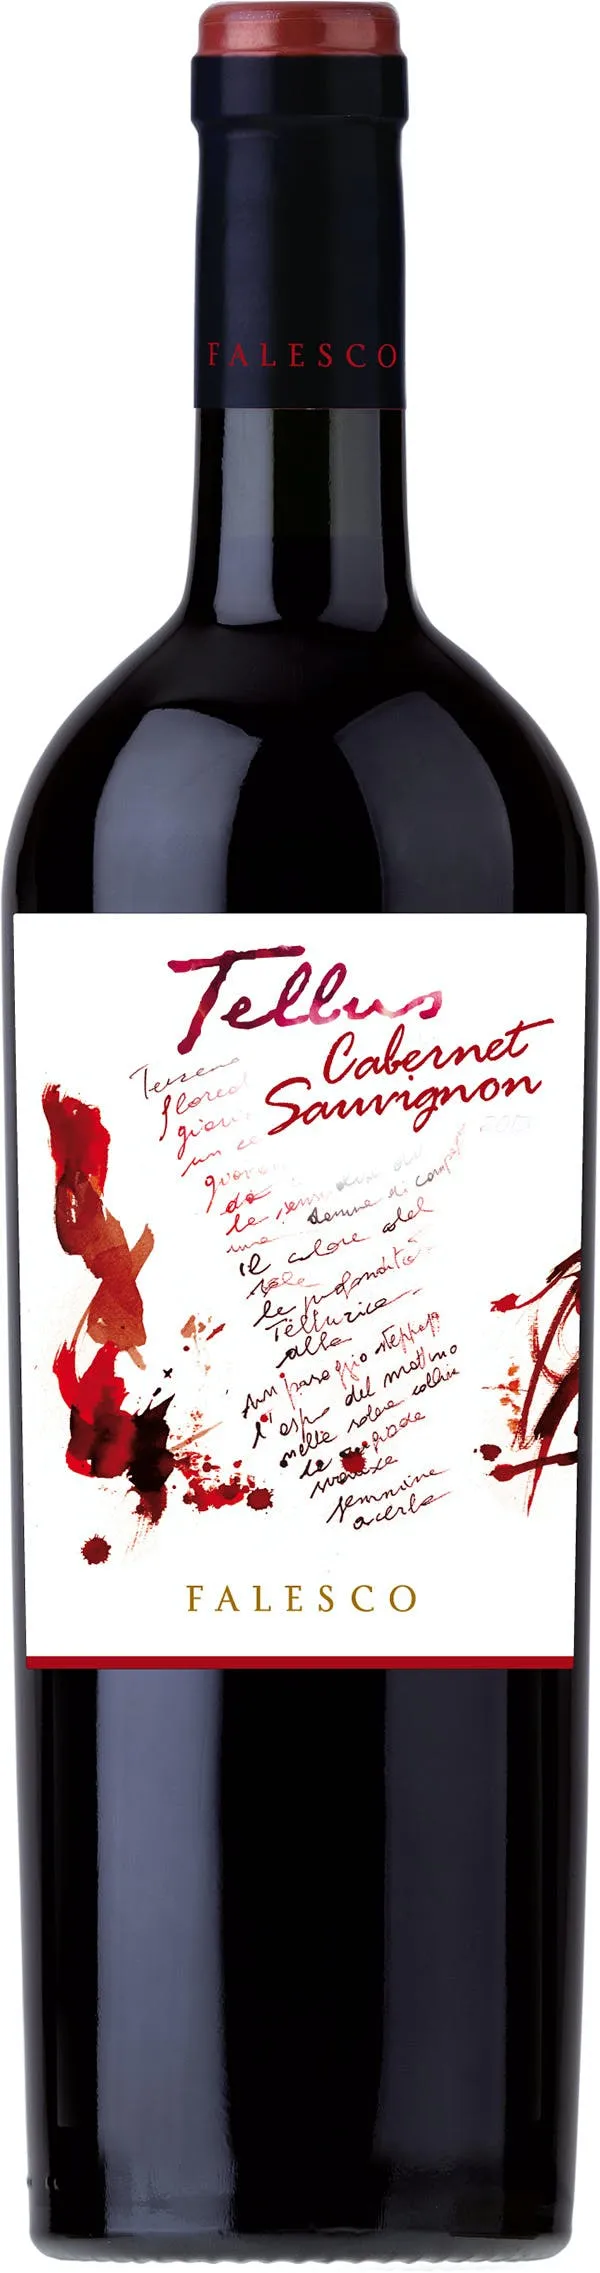 Bottle of Falesco Tellus Cabernet Sauvignonwith label visible